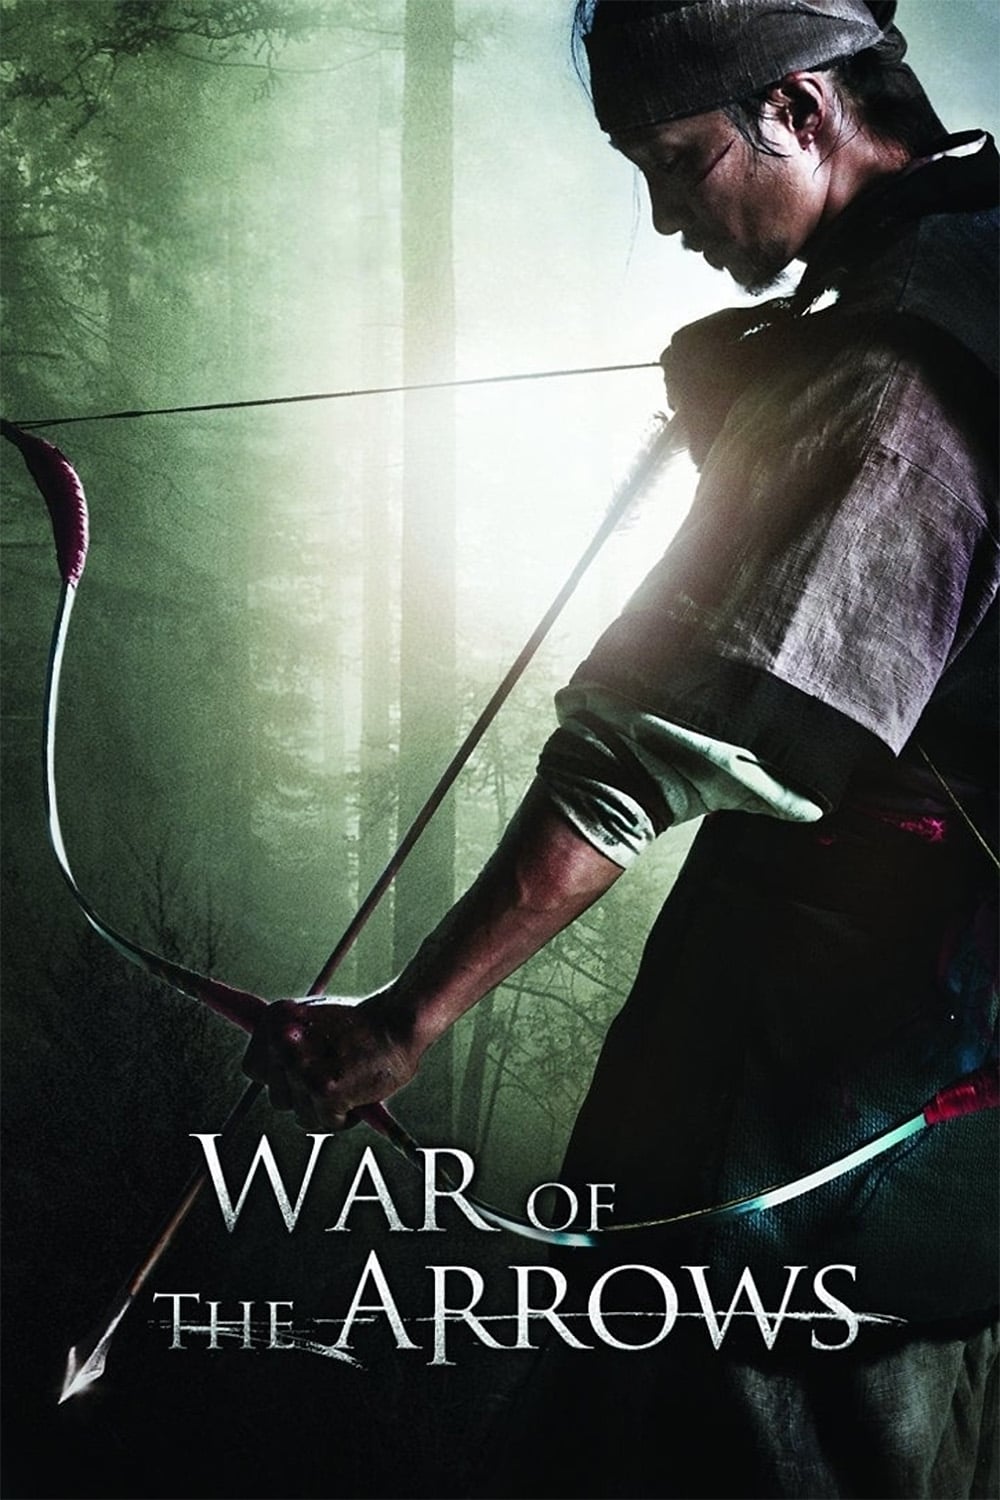 War of the arrows [Sub-ITA] (2011)